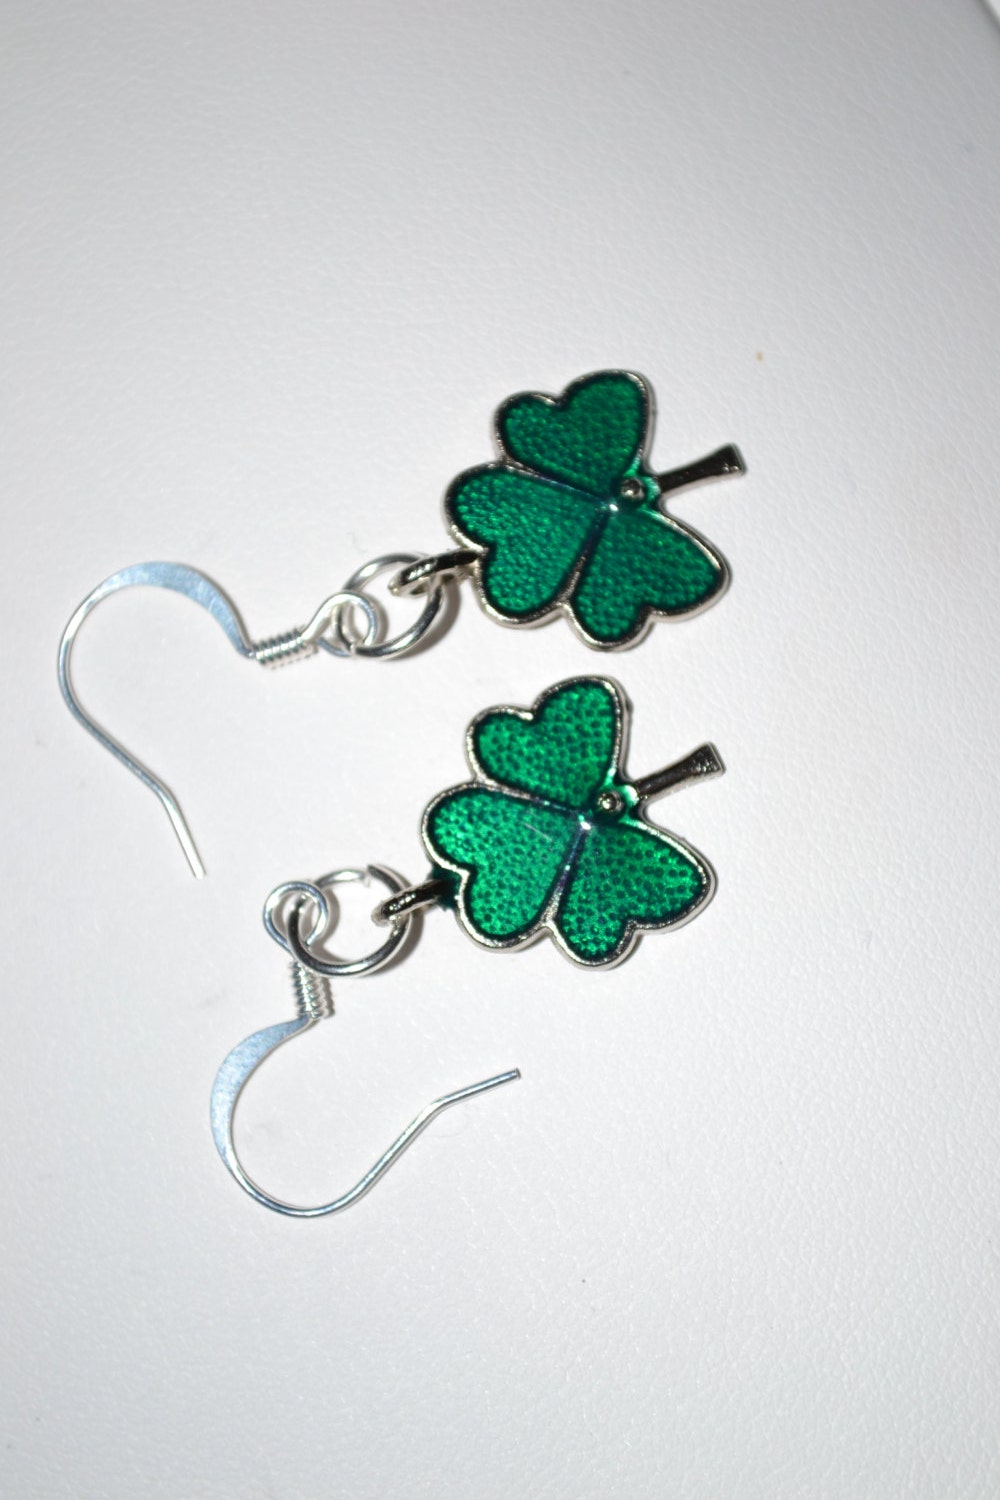 Shiny Clover / Shamrock Charm Earrings - St. Patrick's Day - Pierced Ears or Clip-On - MandaLynnCreations